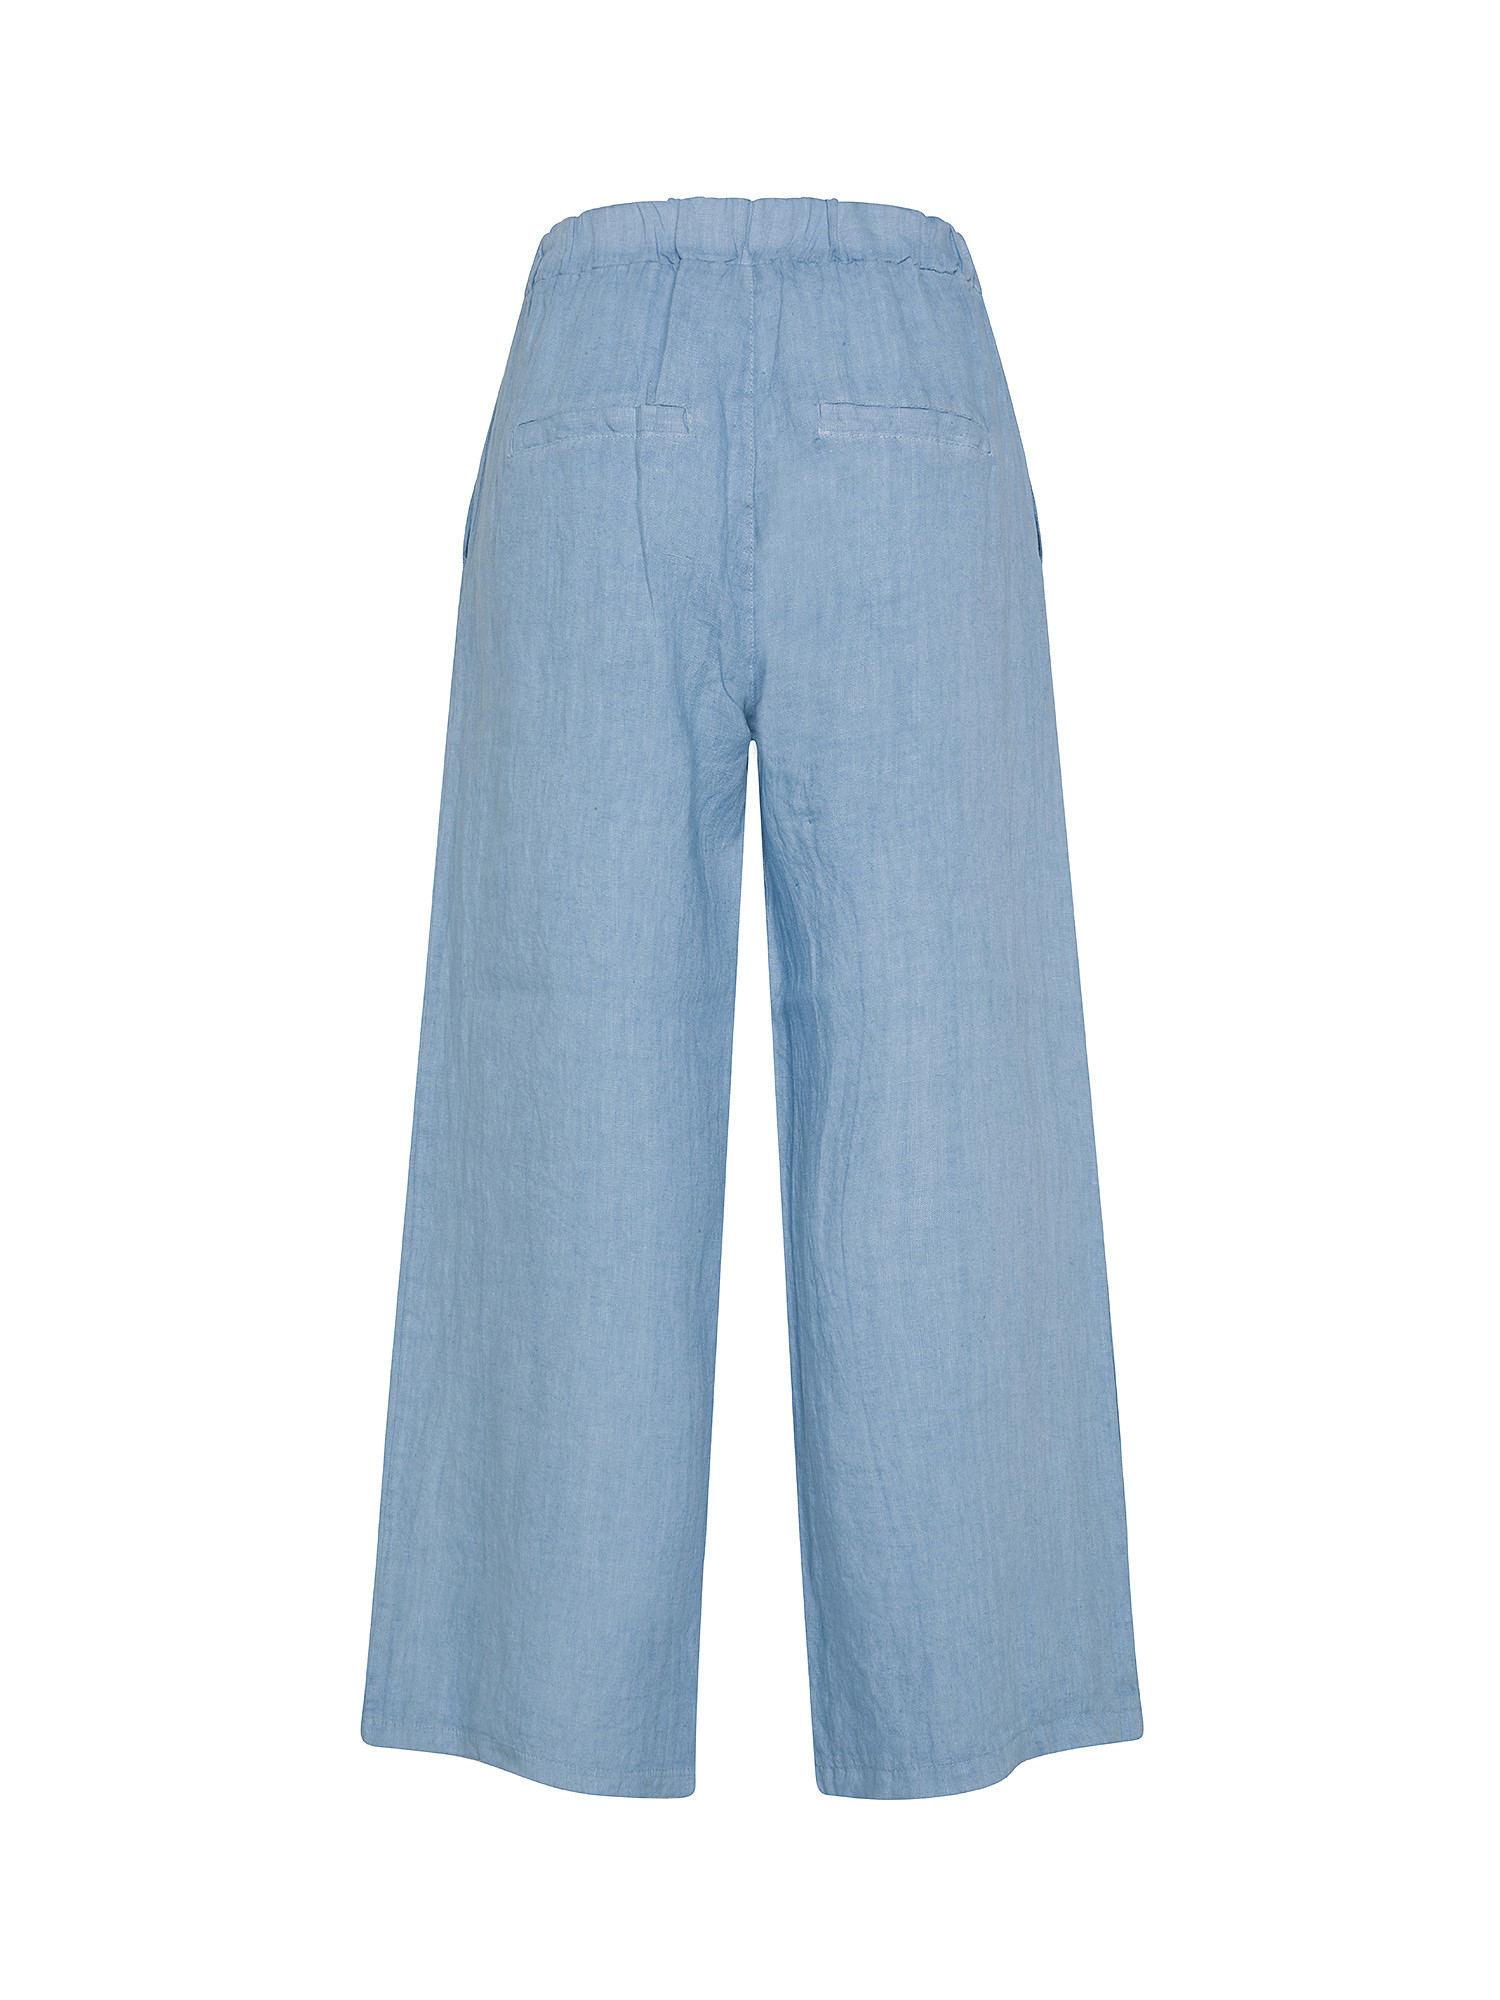 Koan - Wide linen trousers, Denim, large image number 1